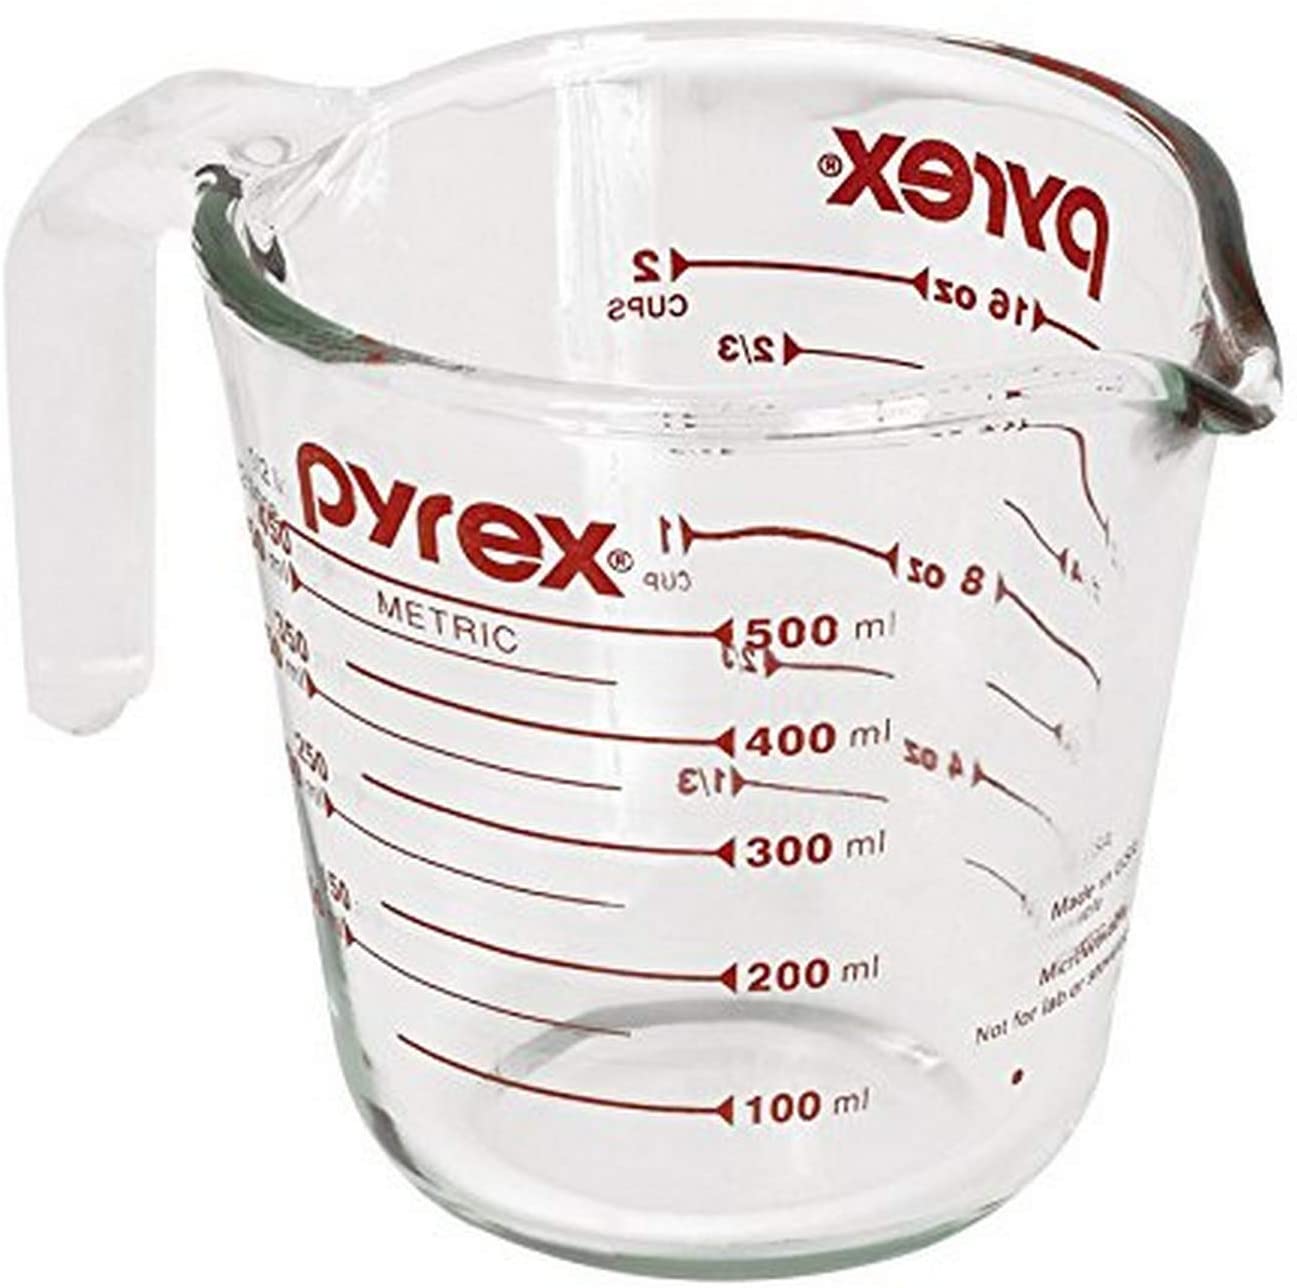 https://www.dontwasteyourmoney.com/wp-content/uploads/2020/08/pyrex-prepware-2-cup-liquid-measuring-cup-liquid-measuring-cup.jpg